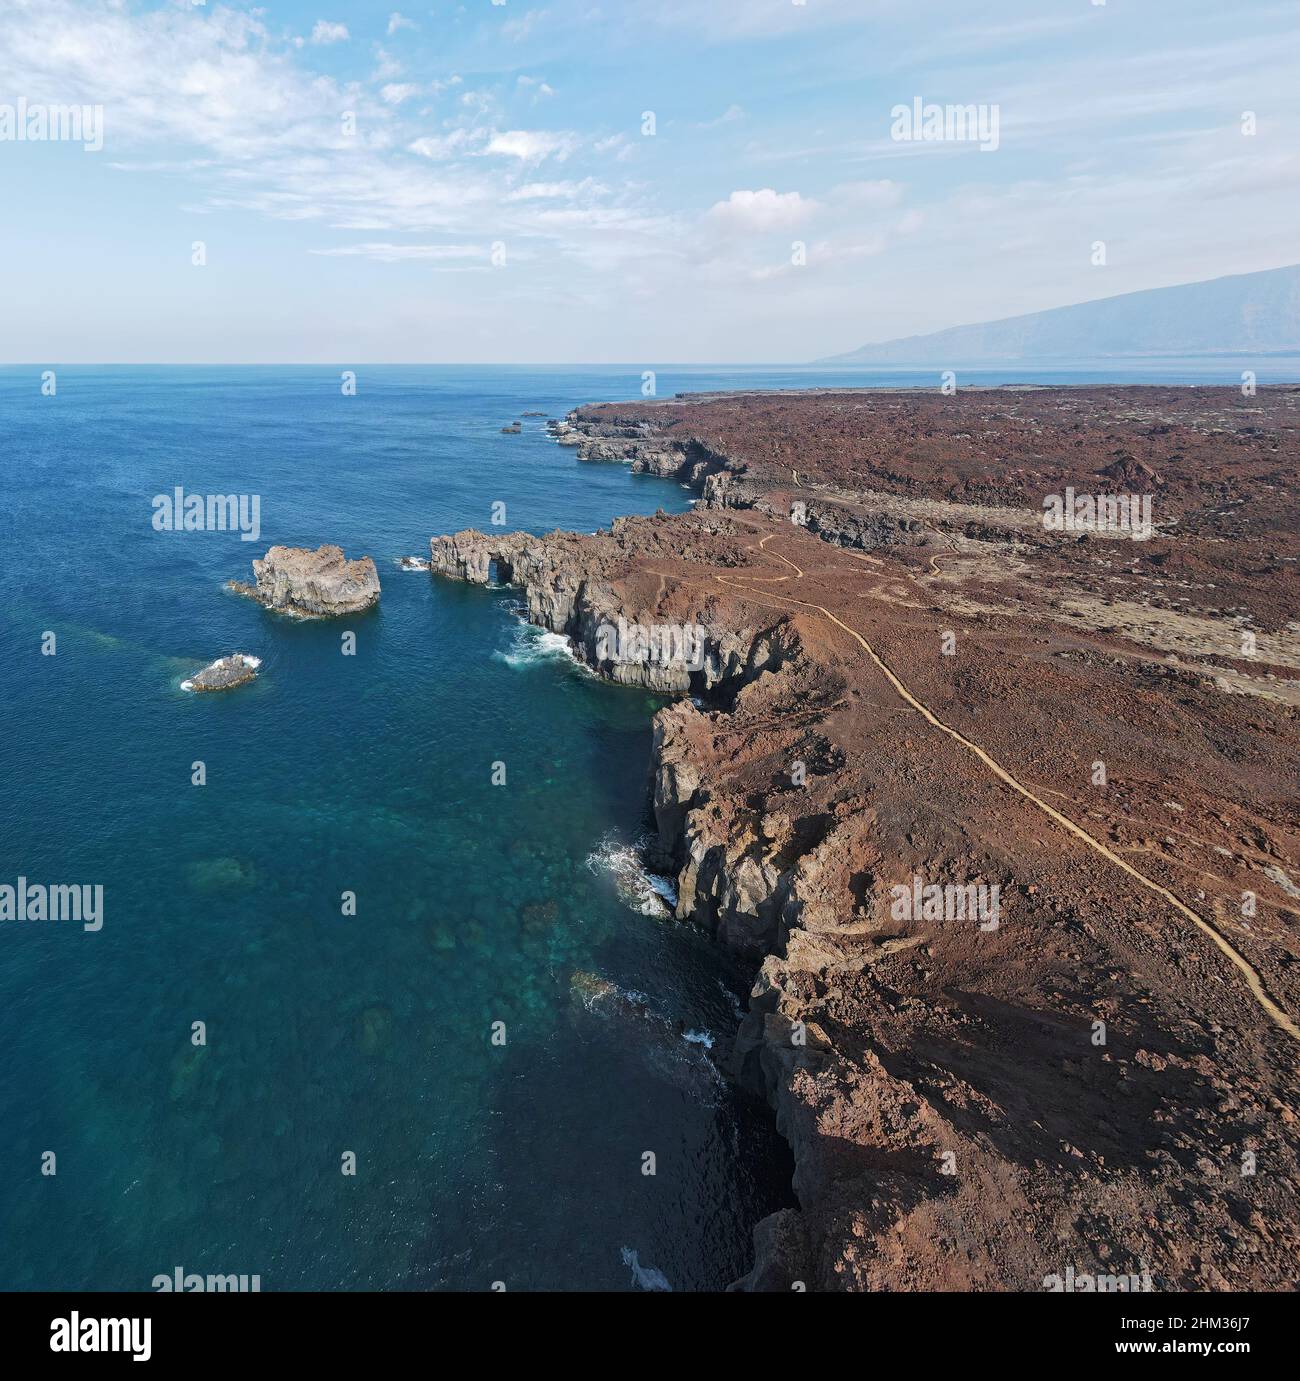 Panorama aérien du sentier côtier de randonnée près de Arco de la Tosca - El Hierro (îles Canaries) Banque D'Images